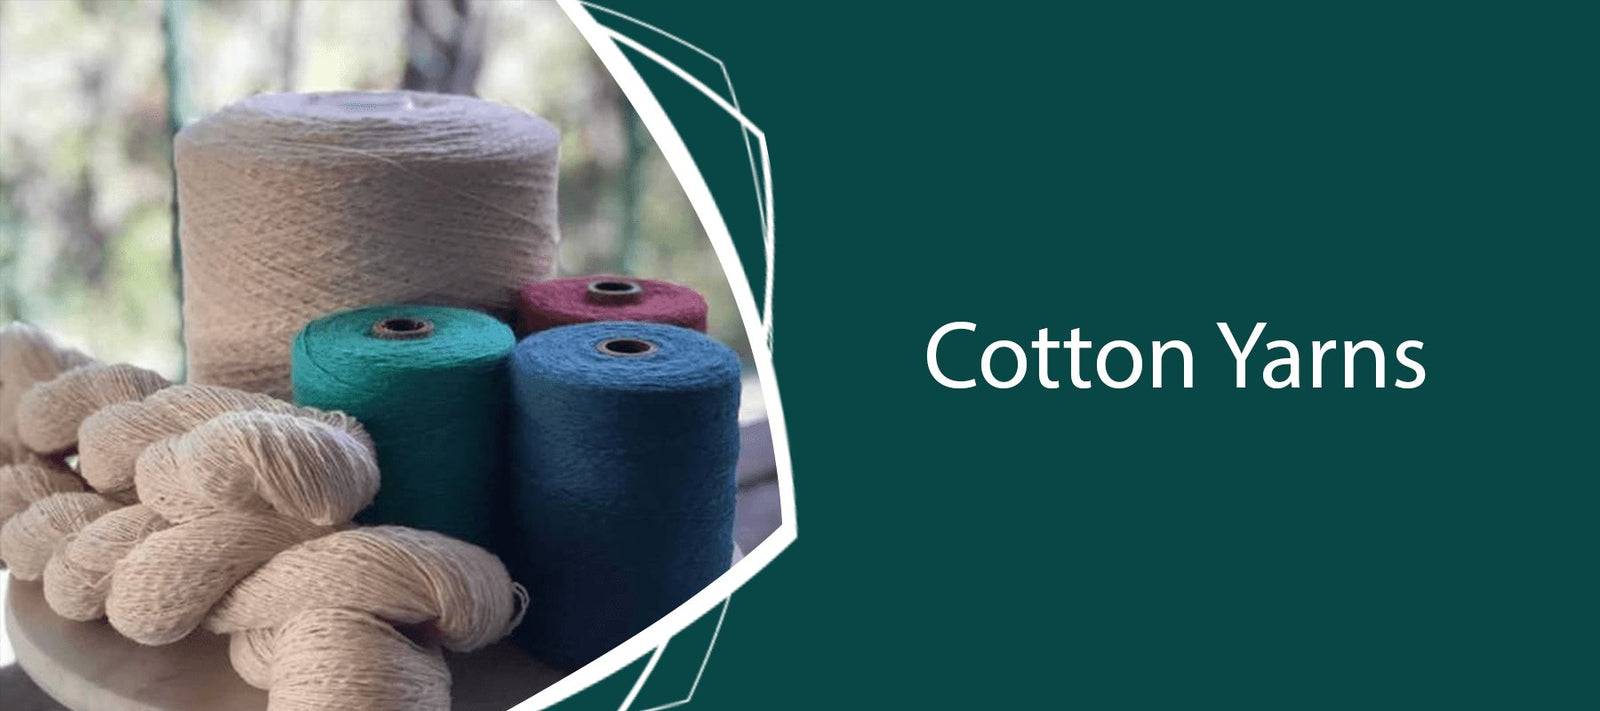 About Strings Yarn - Organic Cotton Yarn